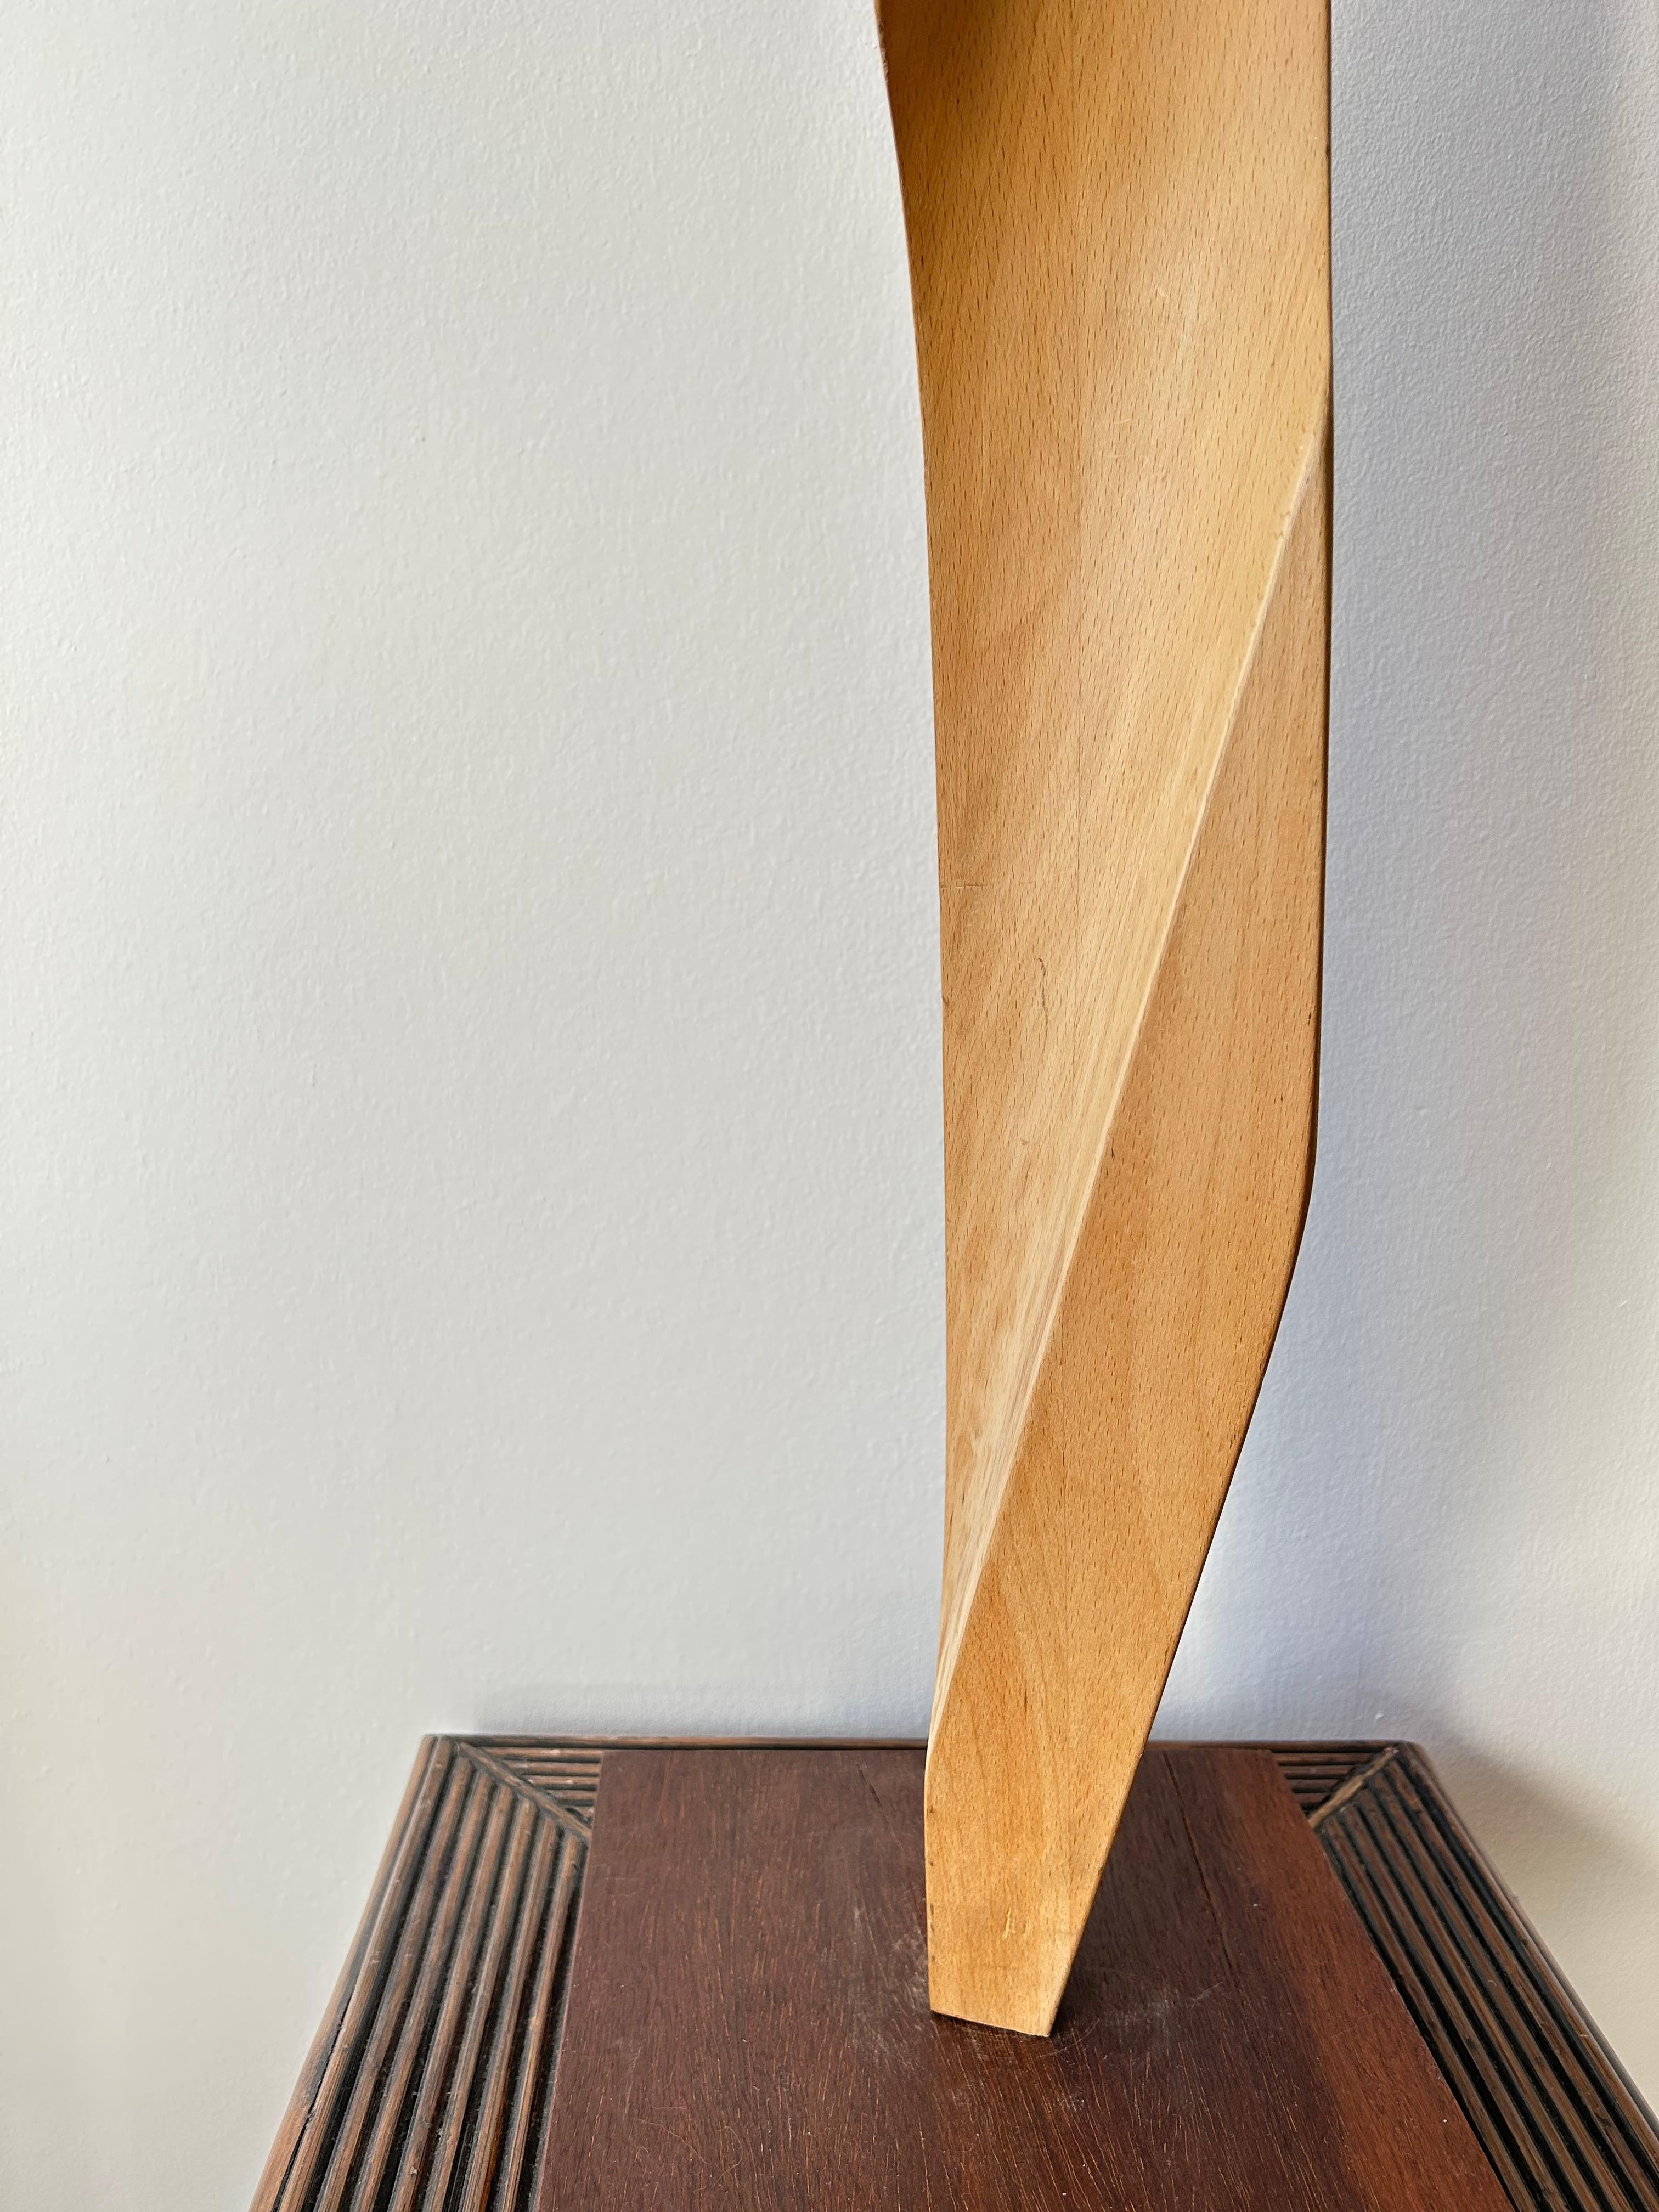 Scandinavian Abstract Wooden Sculpture, 1960s For Sale 1